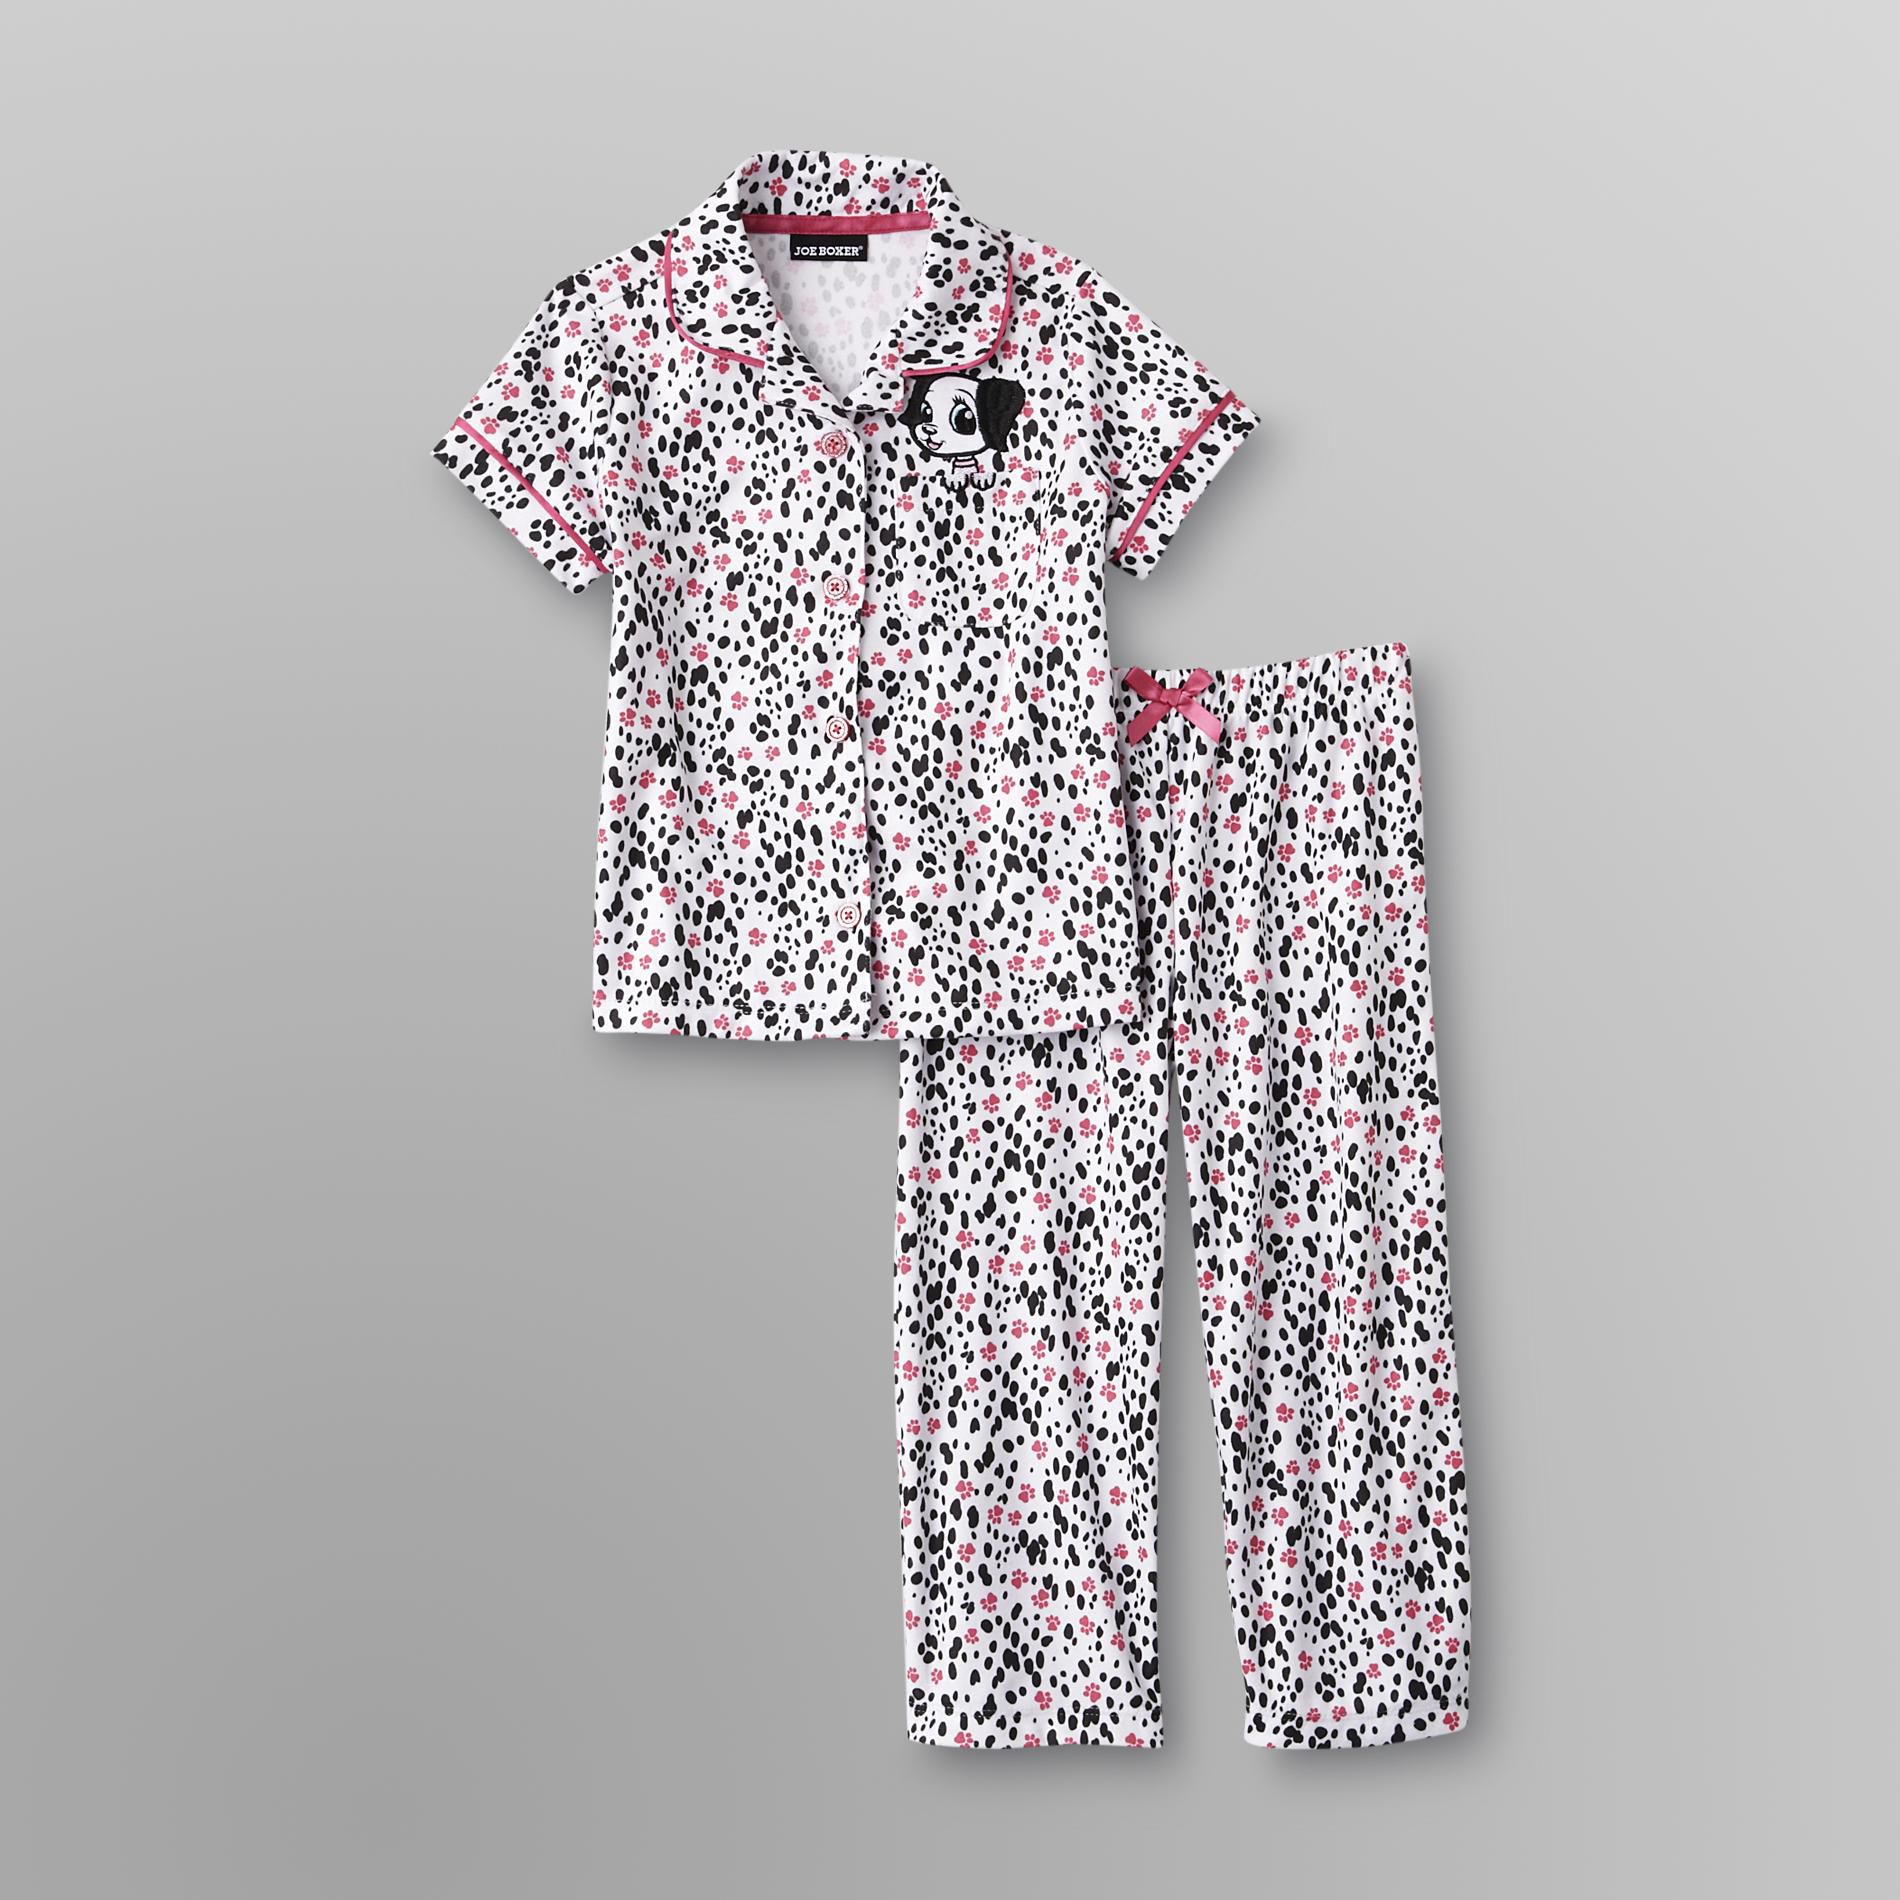 Joe Boxer Toddler Girl's Pajamas - Dalmatian Spots